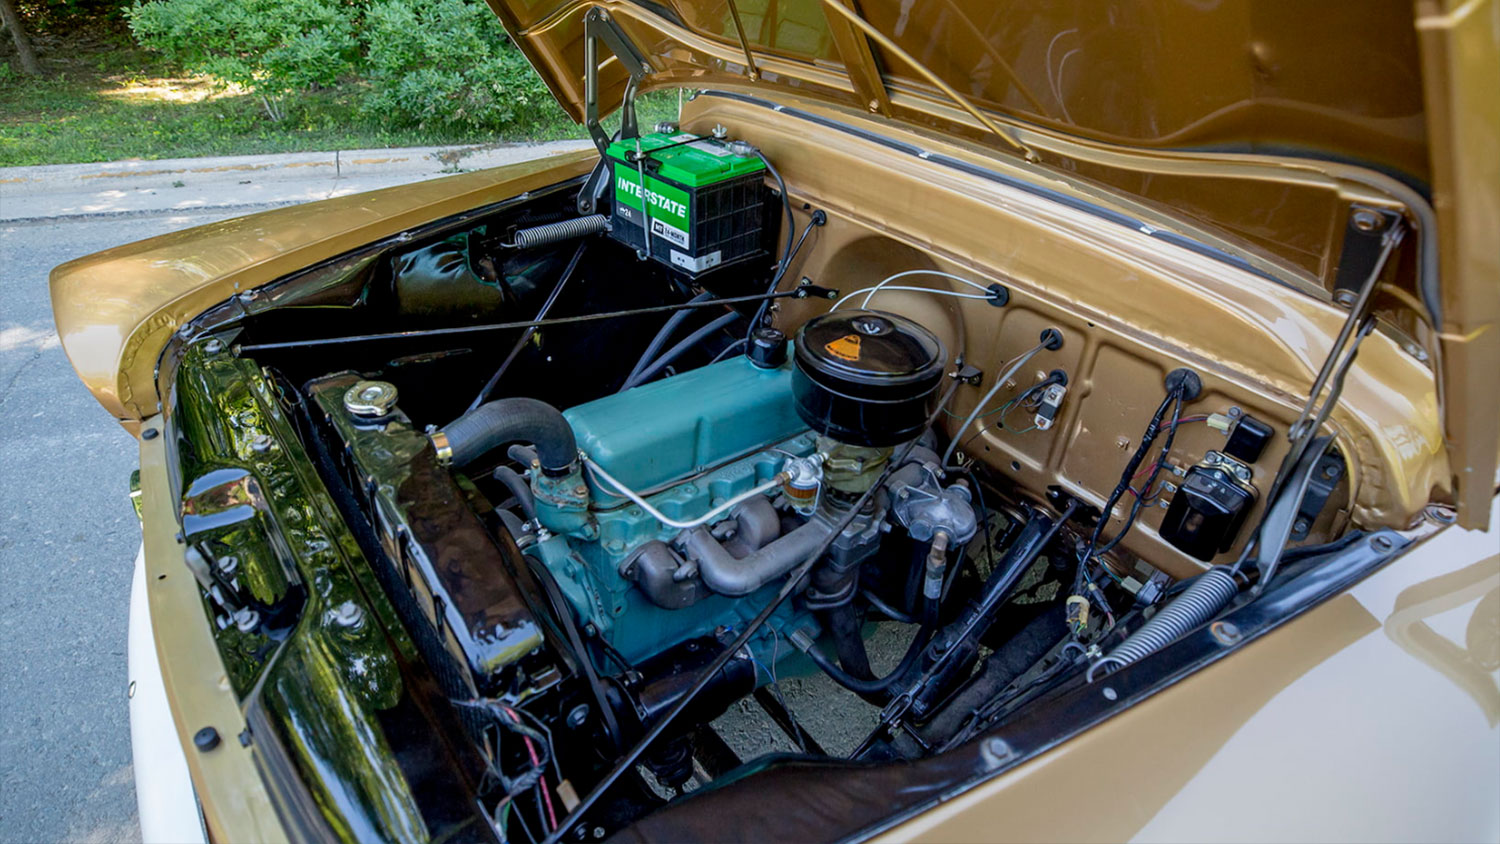 1959 chevy suburban 4x4